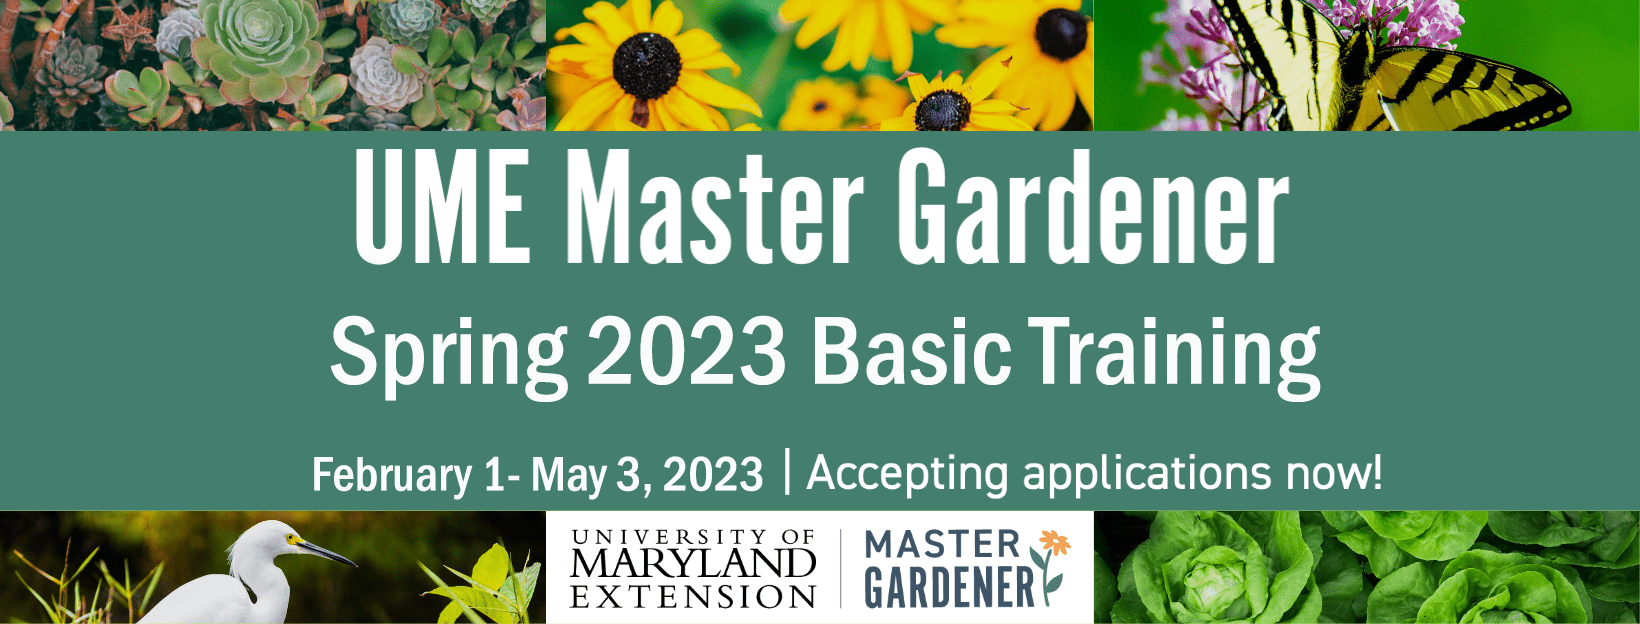 Master Gardner Spring 2023 Basic Training Flier